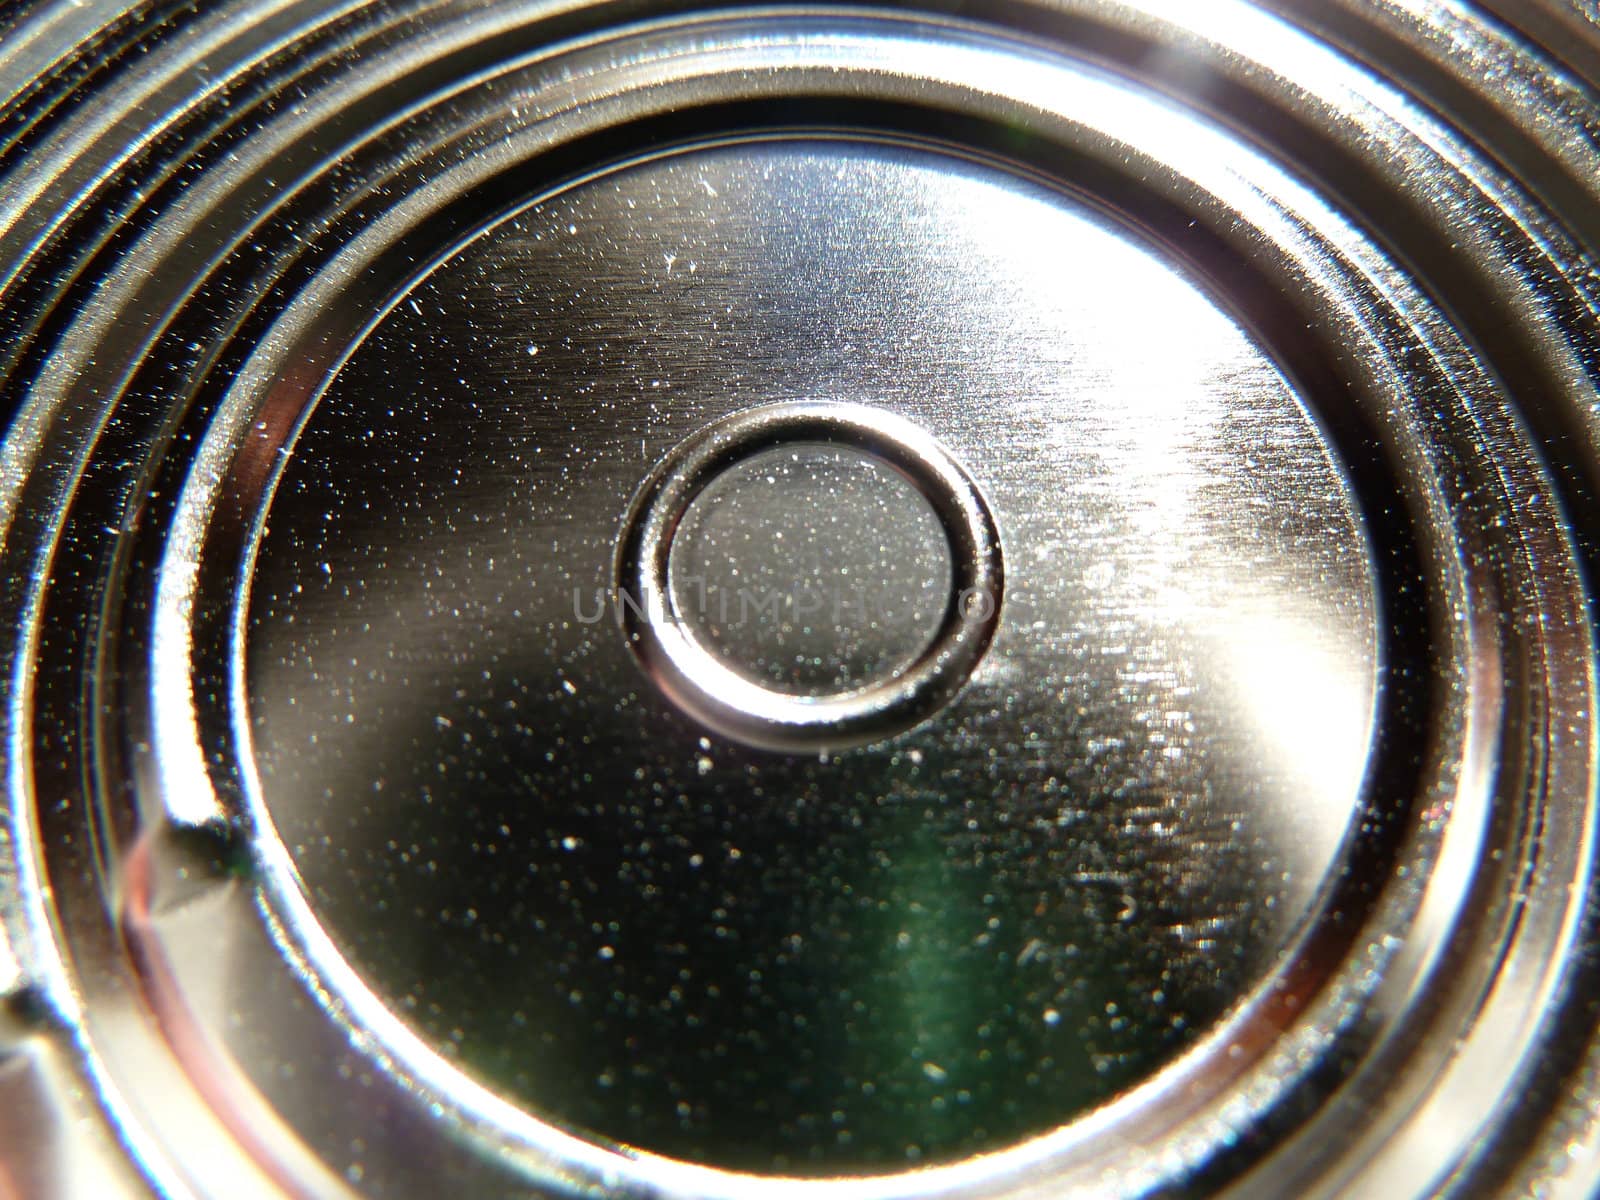 shiny metallic circle as a background